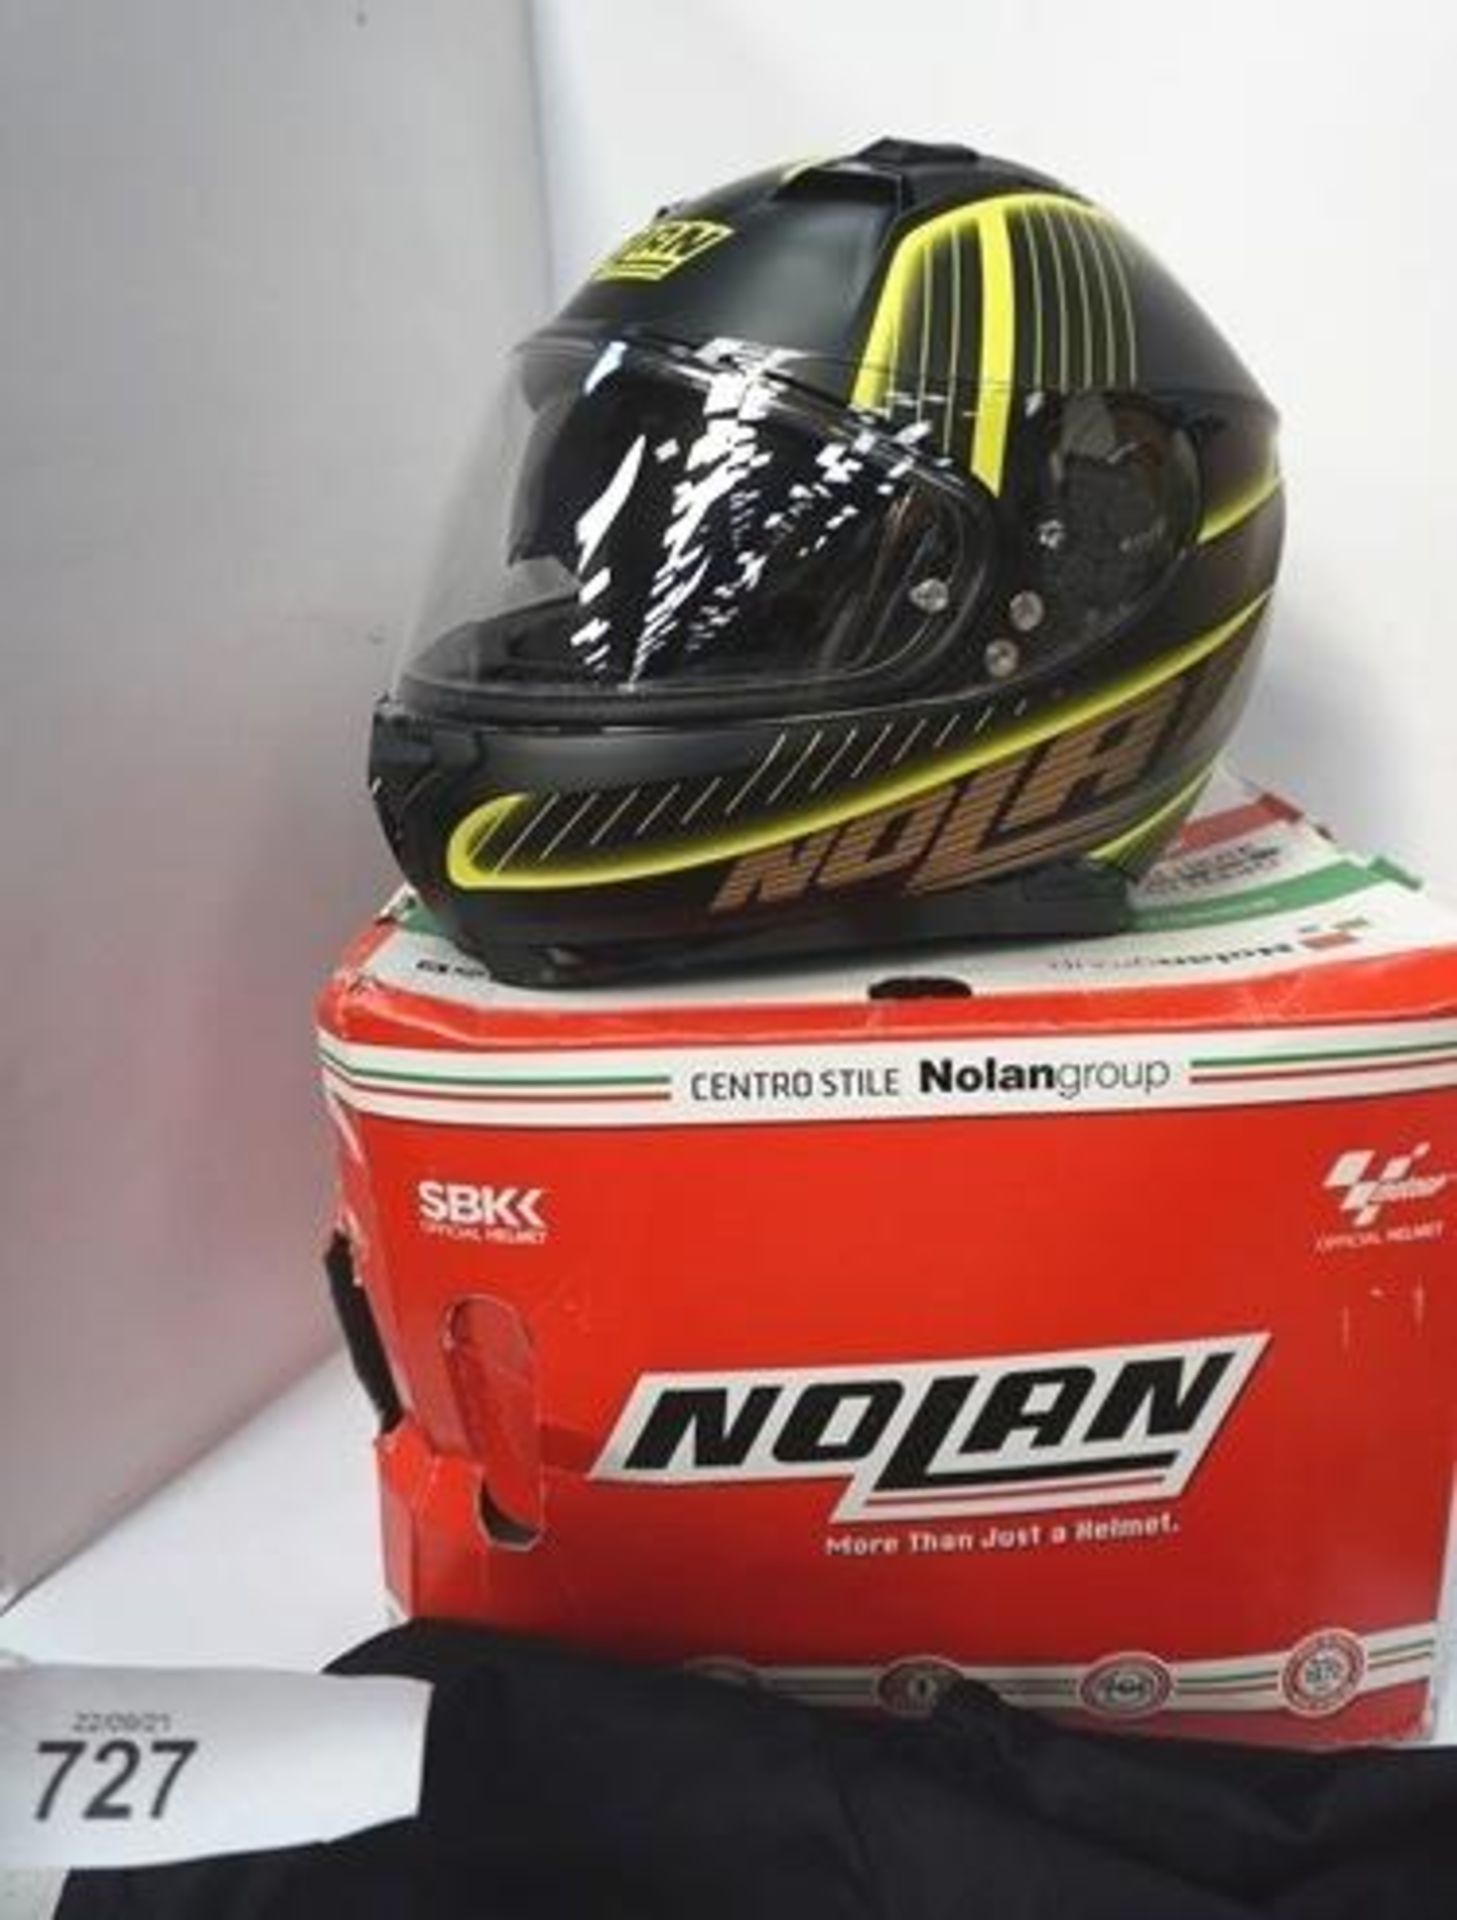 1 x Nolan flat back N87 motorcycle helmet, type Harp -N-Com, size XS, RRP £189.00 - New in box (